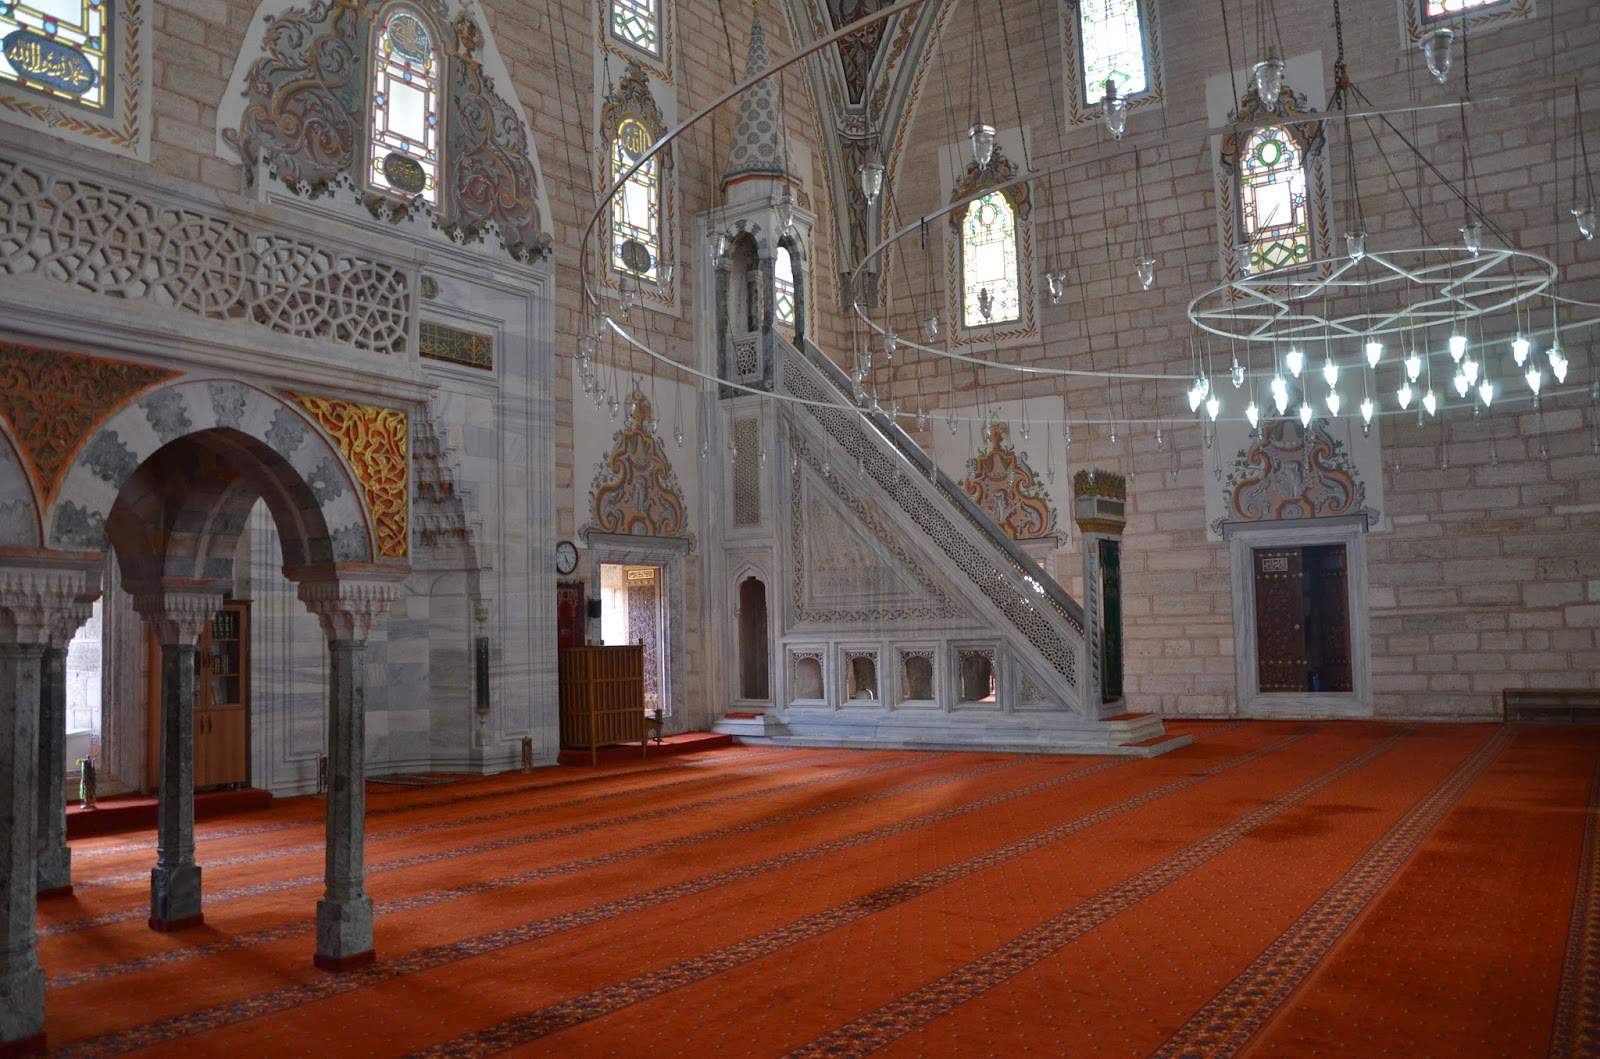 Prayer hall at the Bayezid II Mosque in Edirne, Turkey